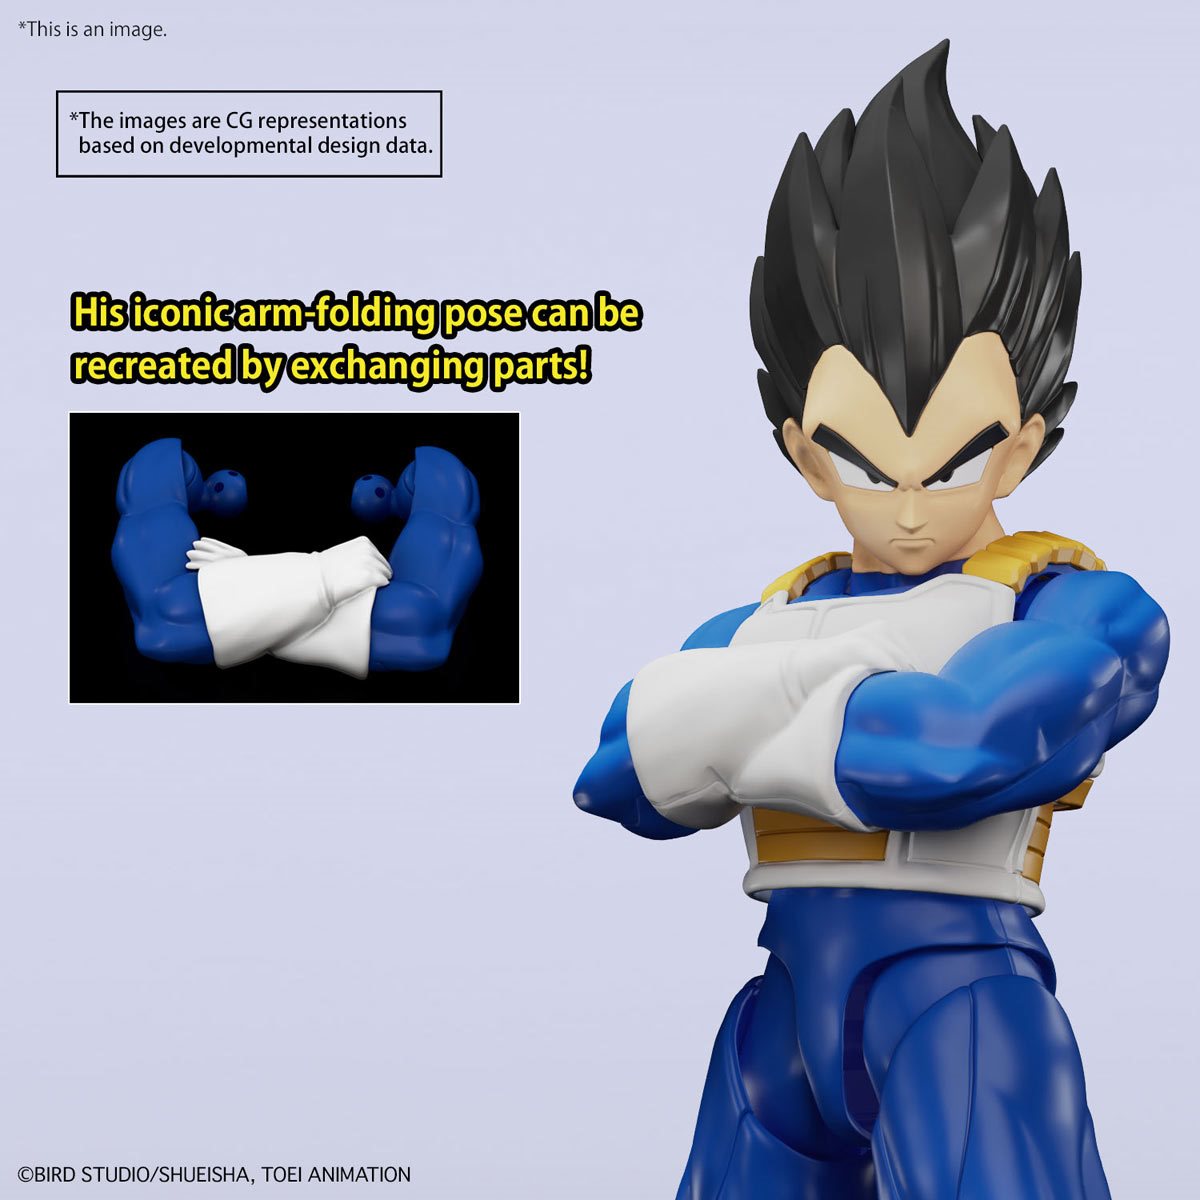 Maquette Goku Ultra-Instinct Figure-rise par Bandai - Dragon Ball Super